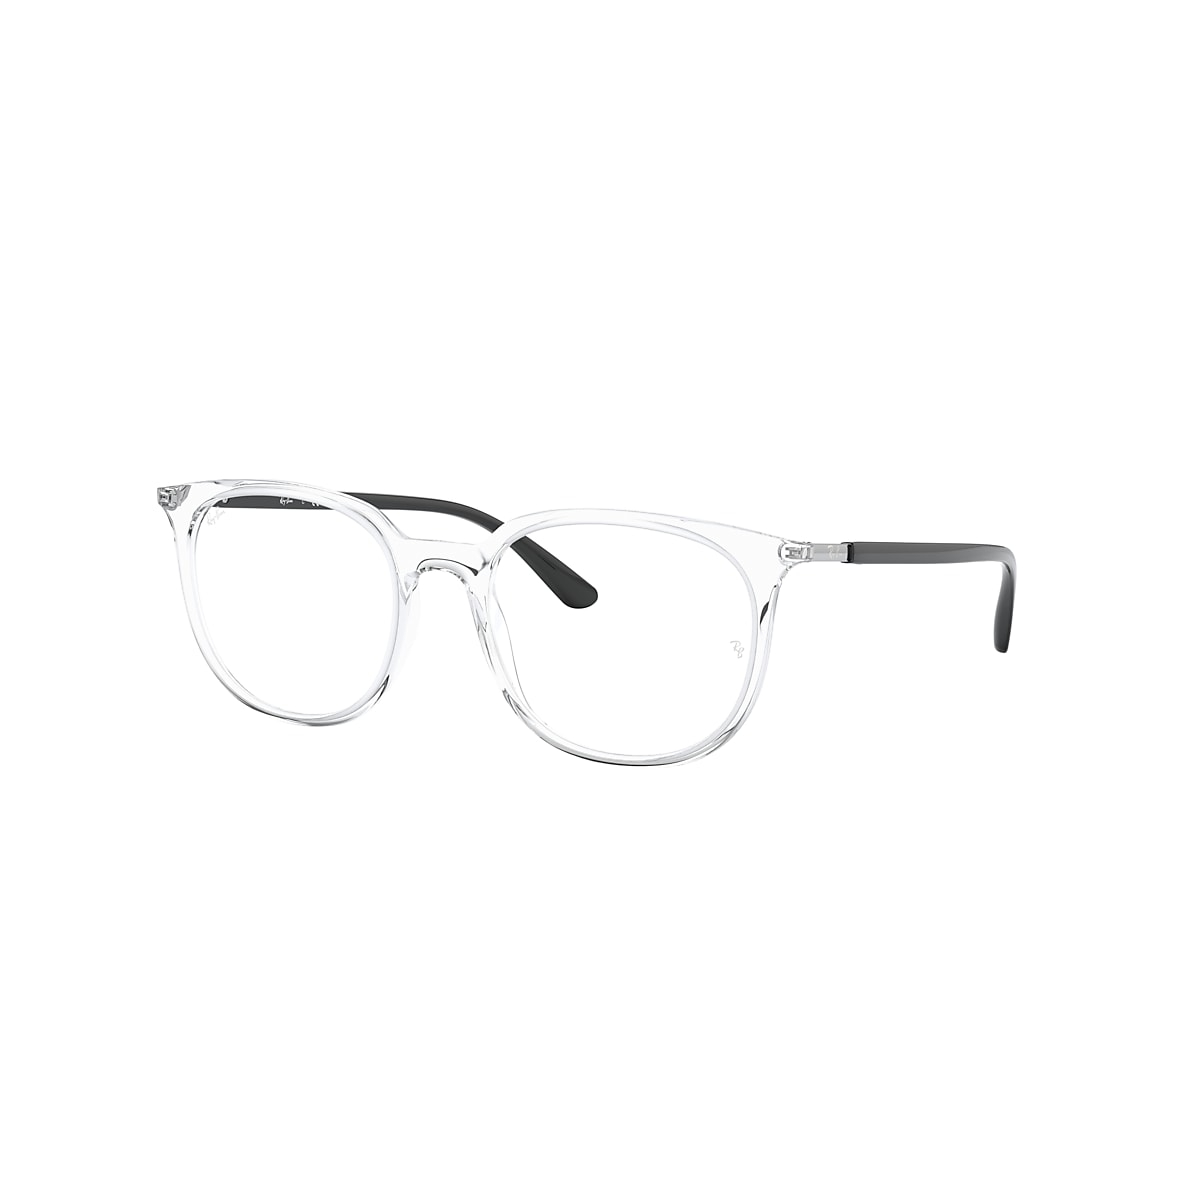 RB7190 OPTICS Eyeglasses with Transparent Frame - Ray-Ban